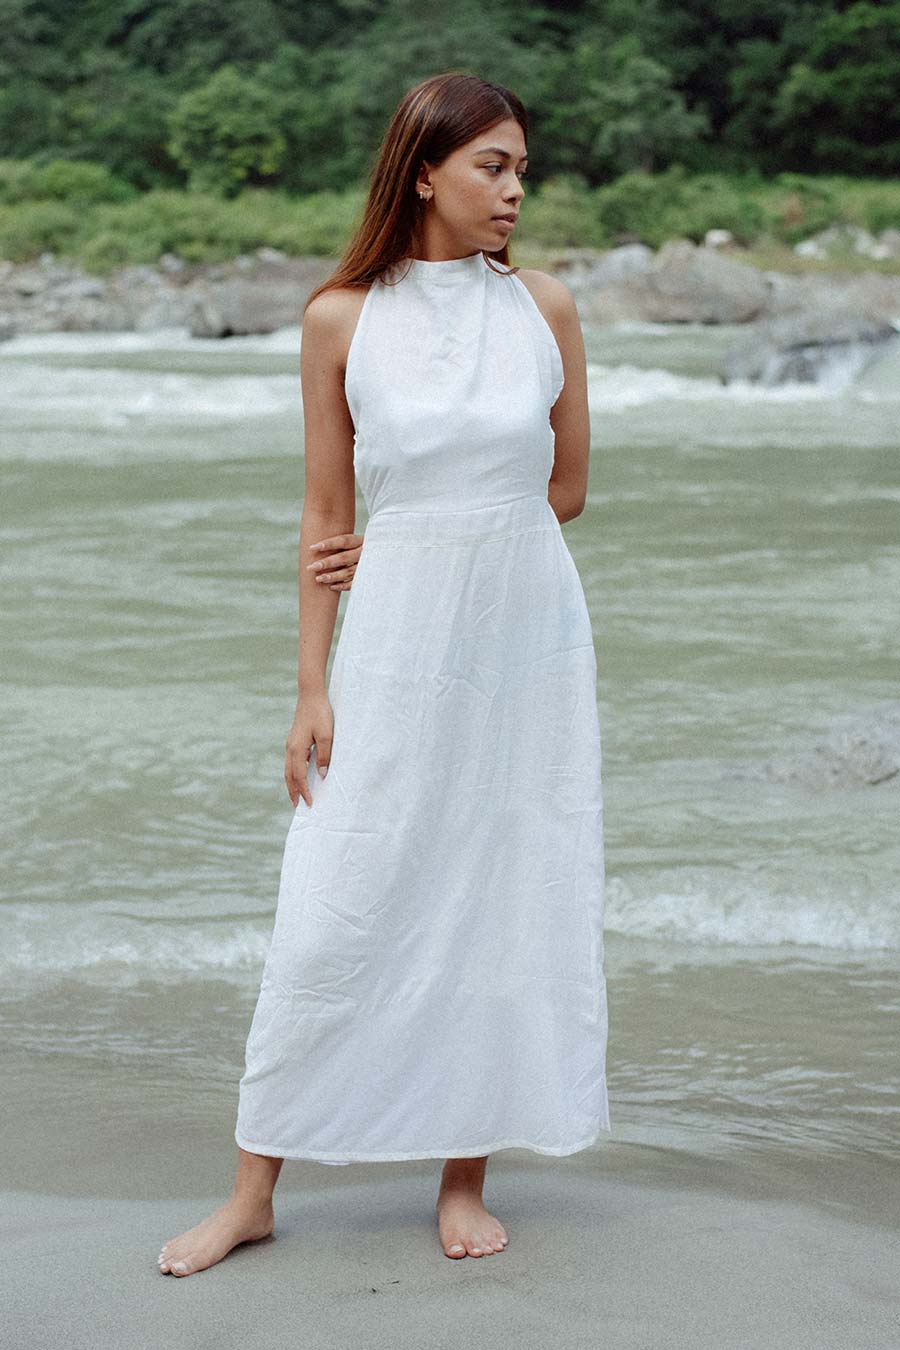 CAPRI - White Cotton Backless Dress